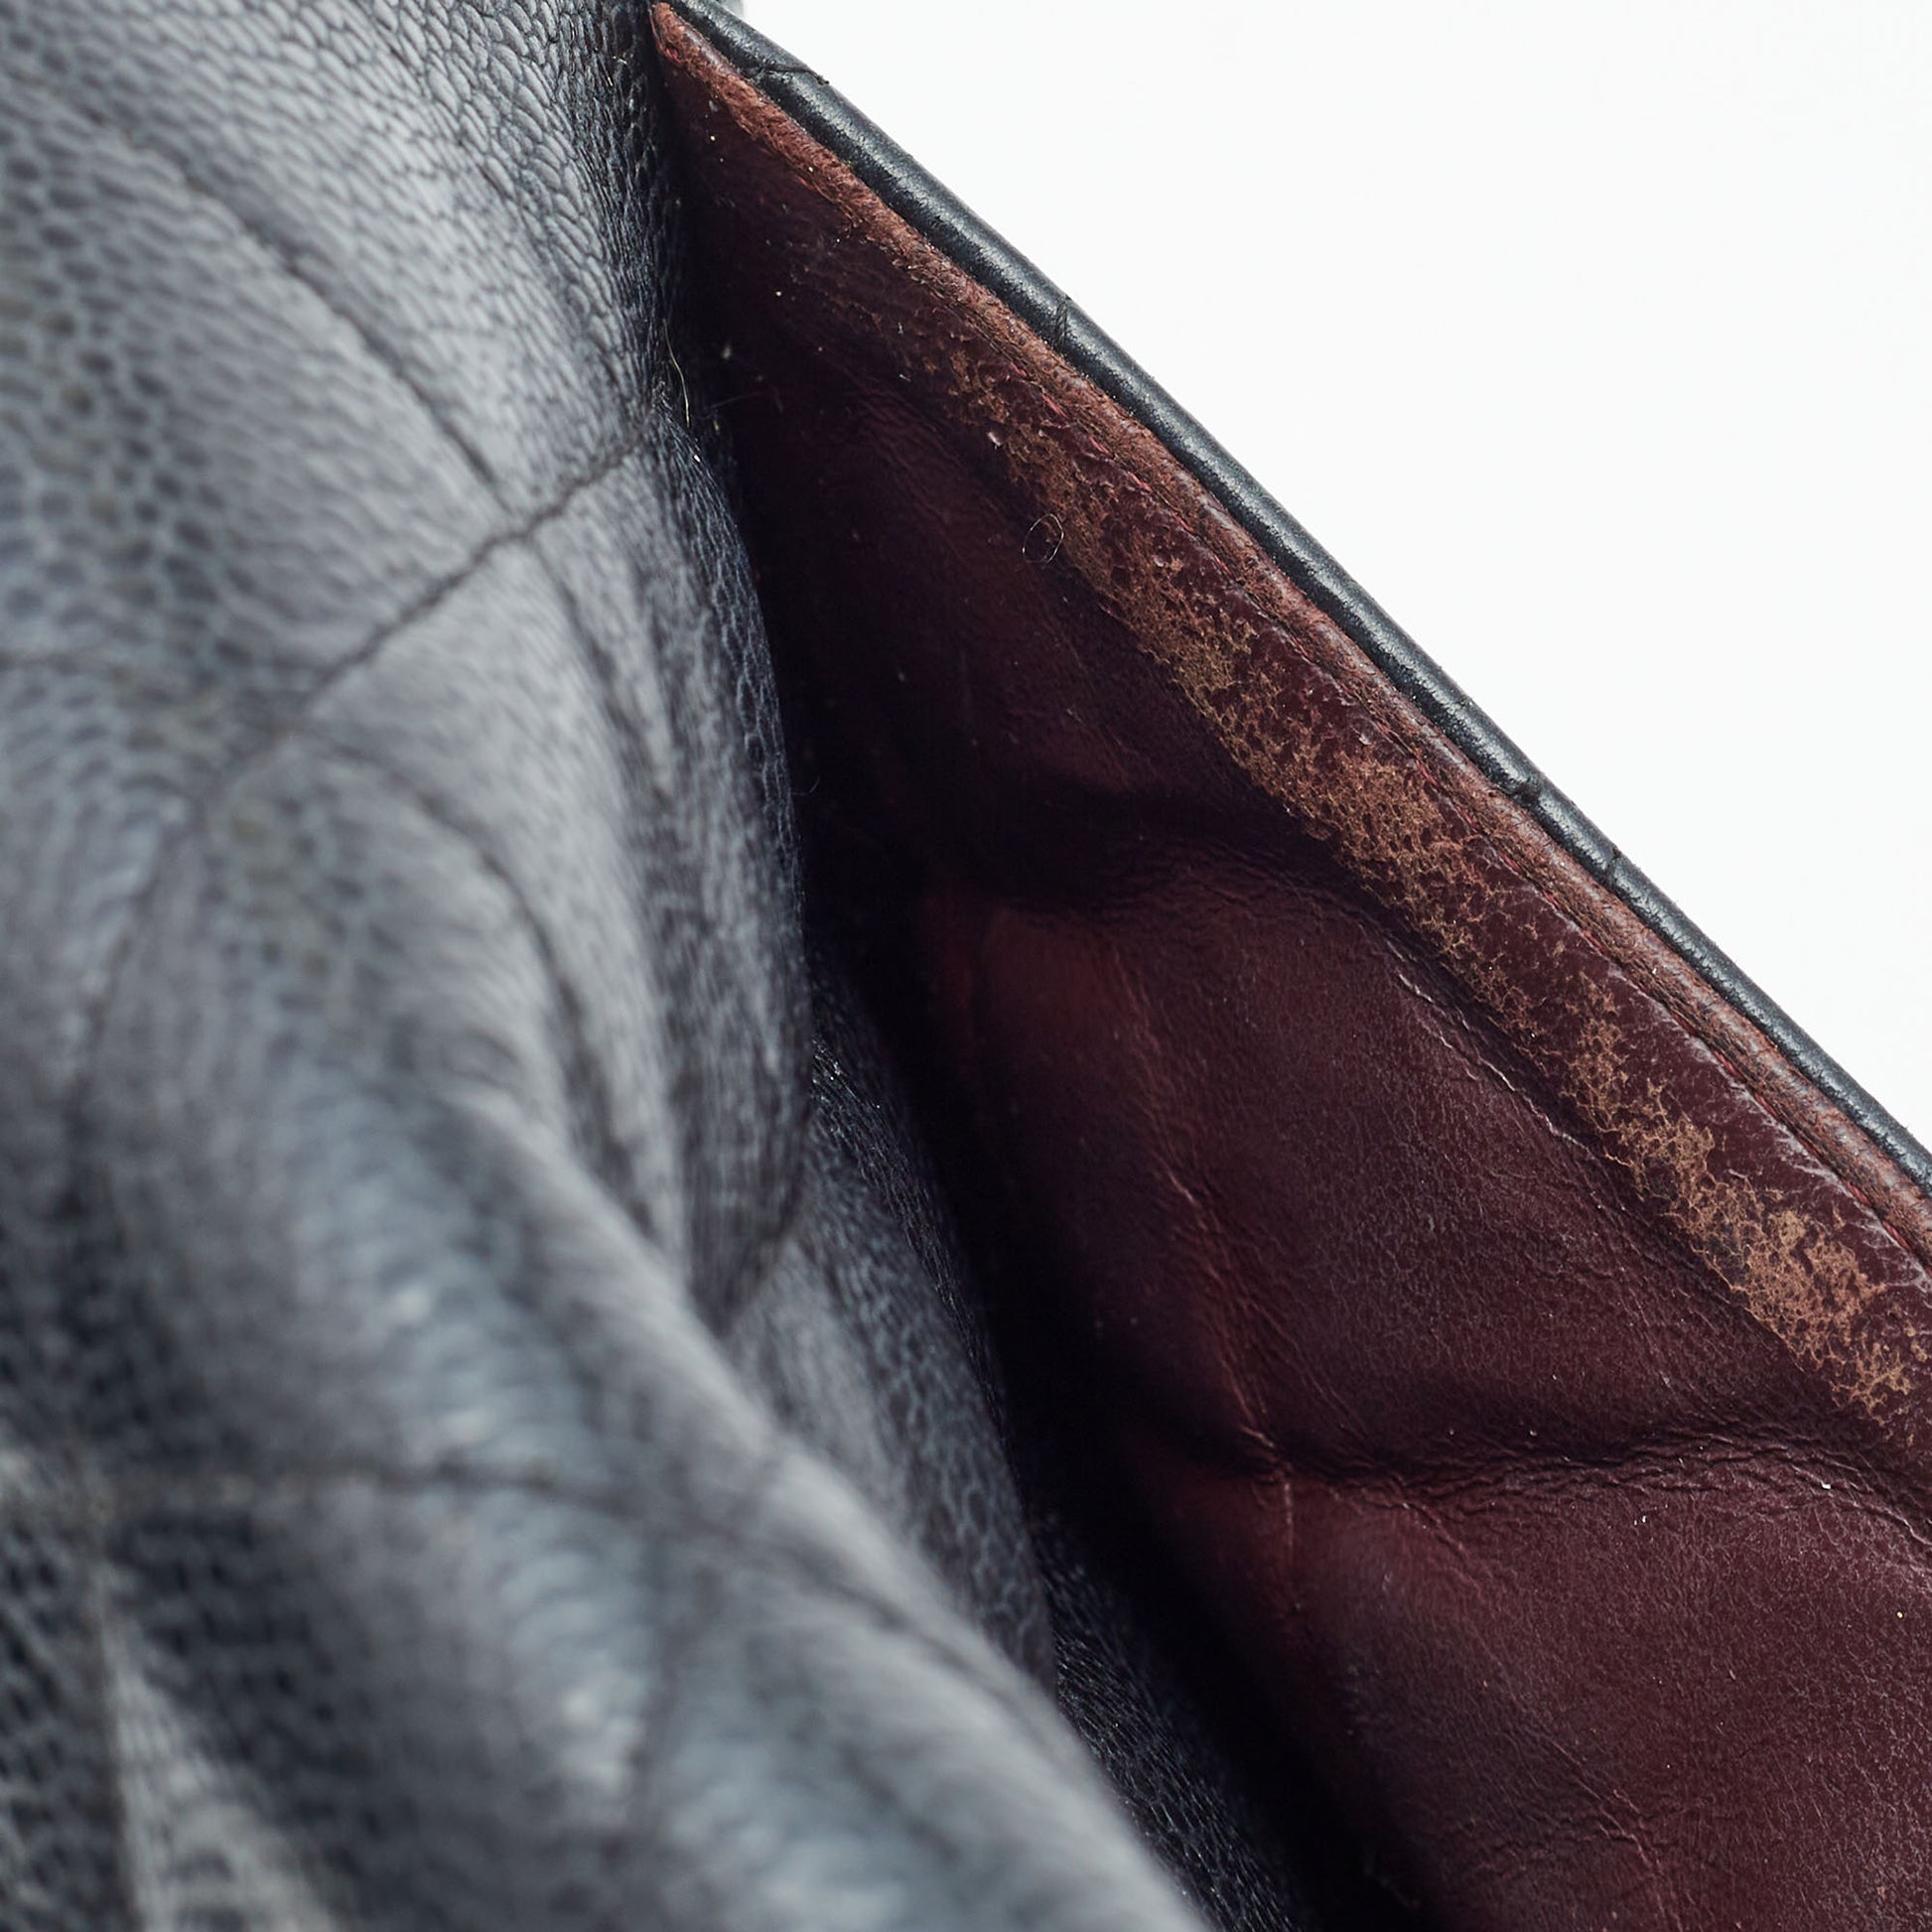 Maxi classic handbag, Grained calfskin & gold-tone metal, black — Fashion